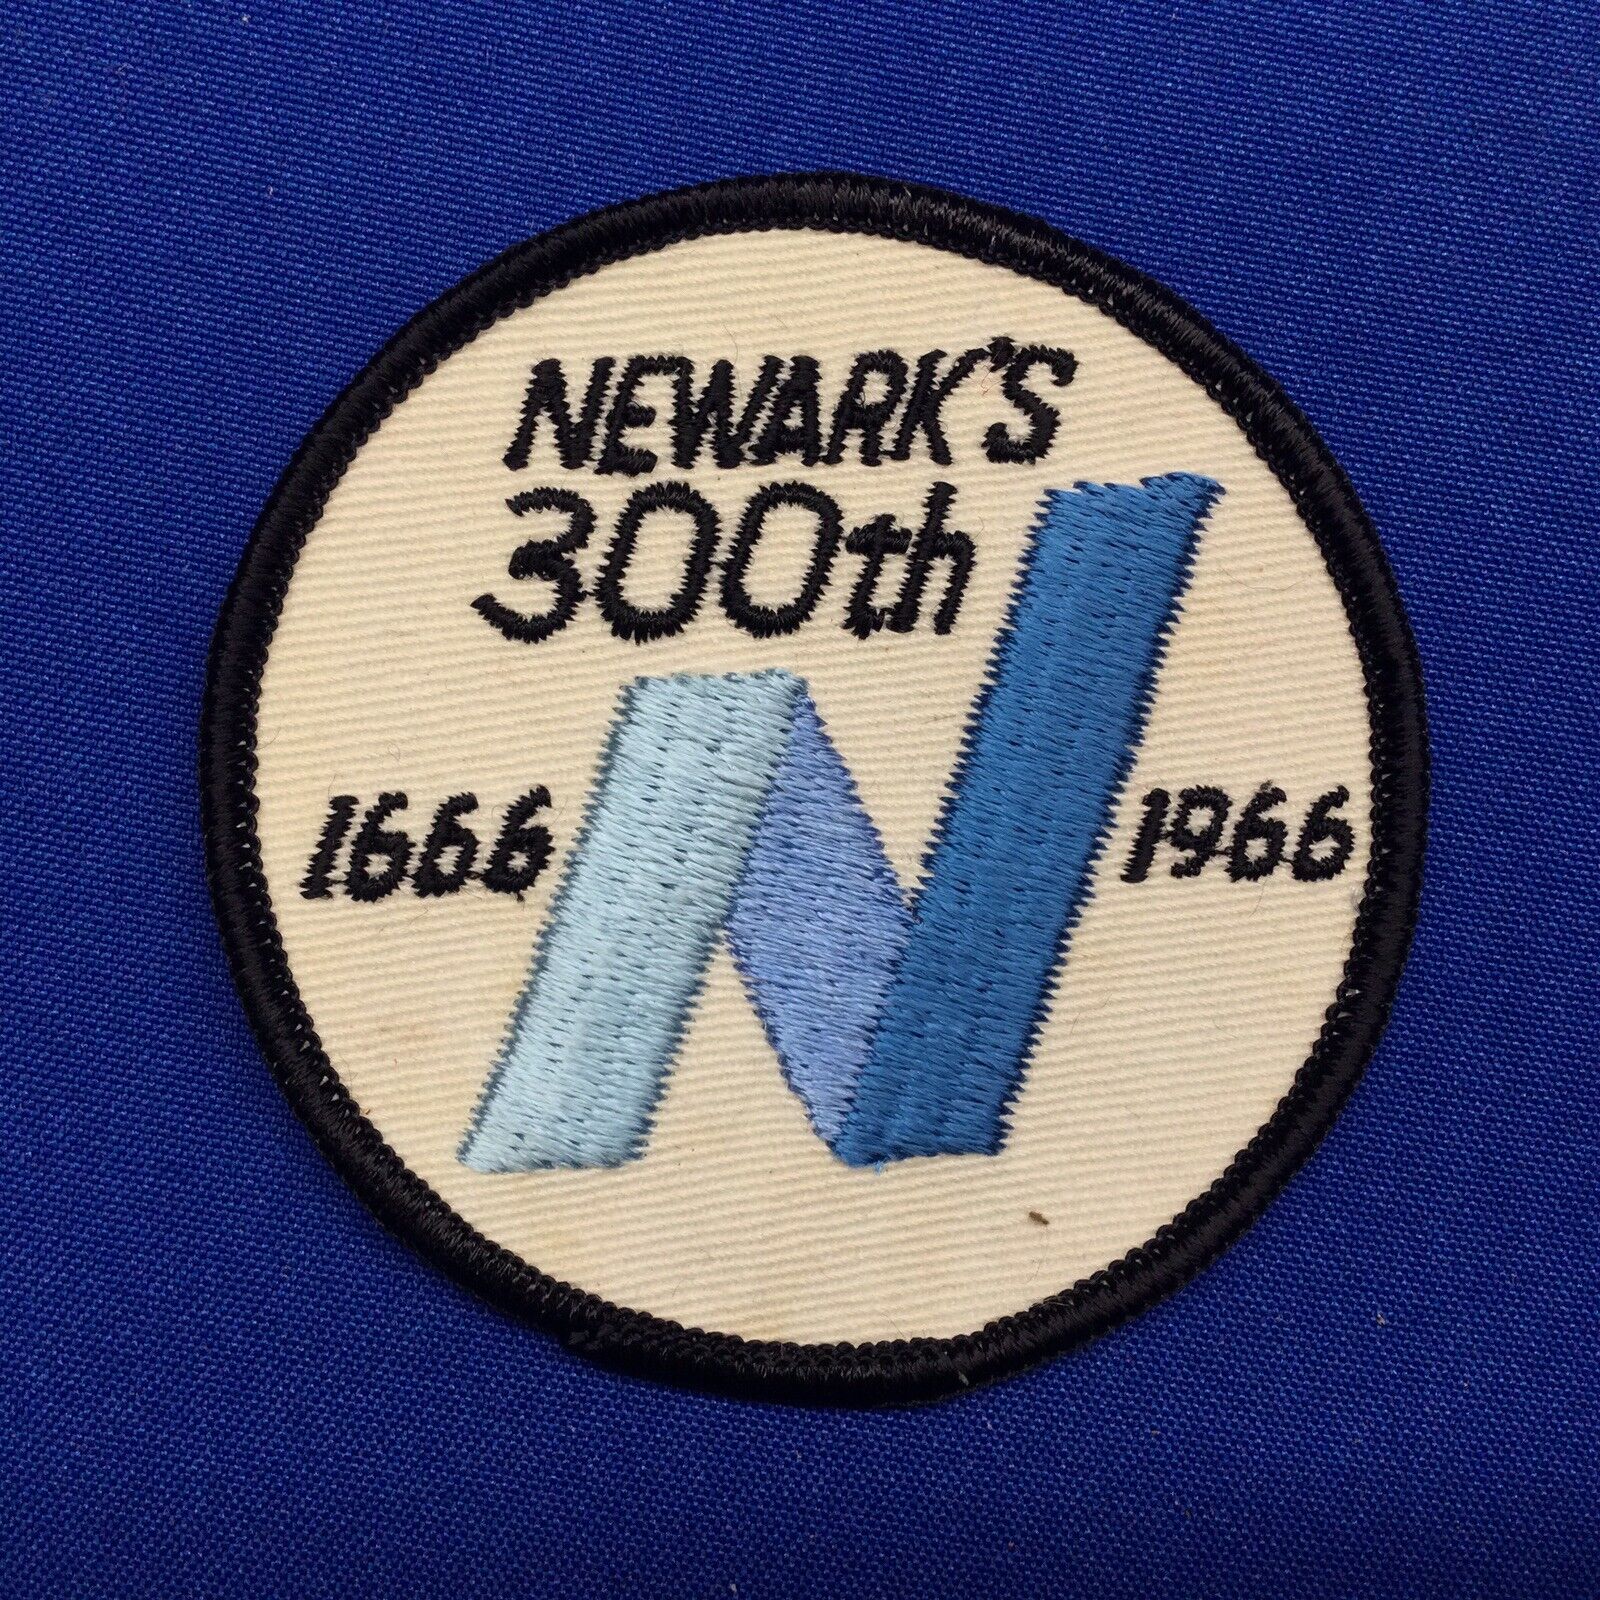 1966 Newark NJ 300th Anniversary Patch